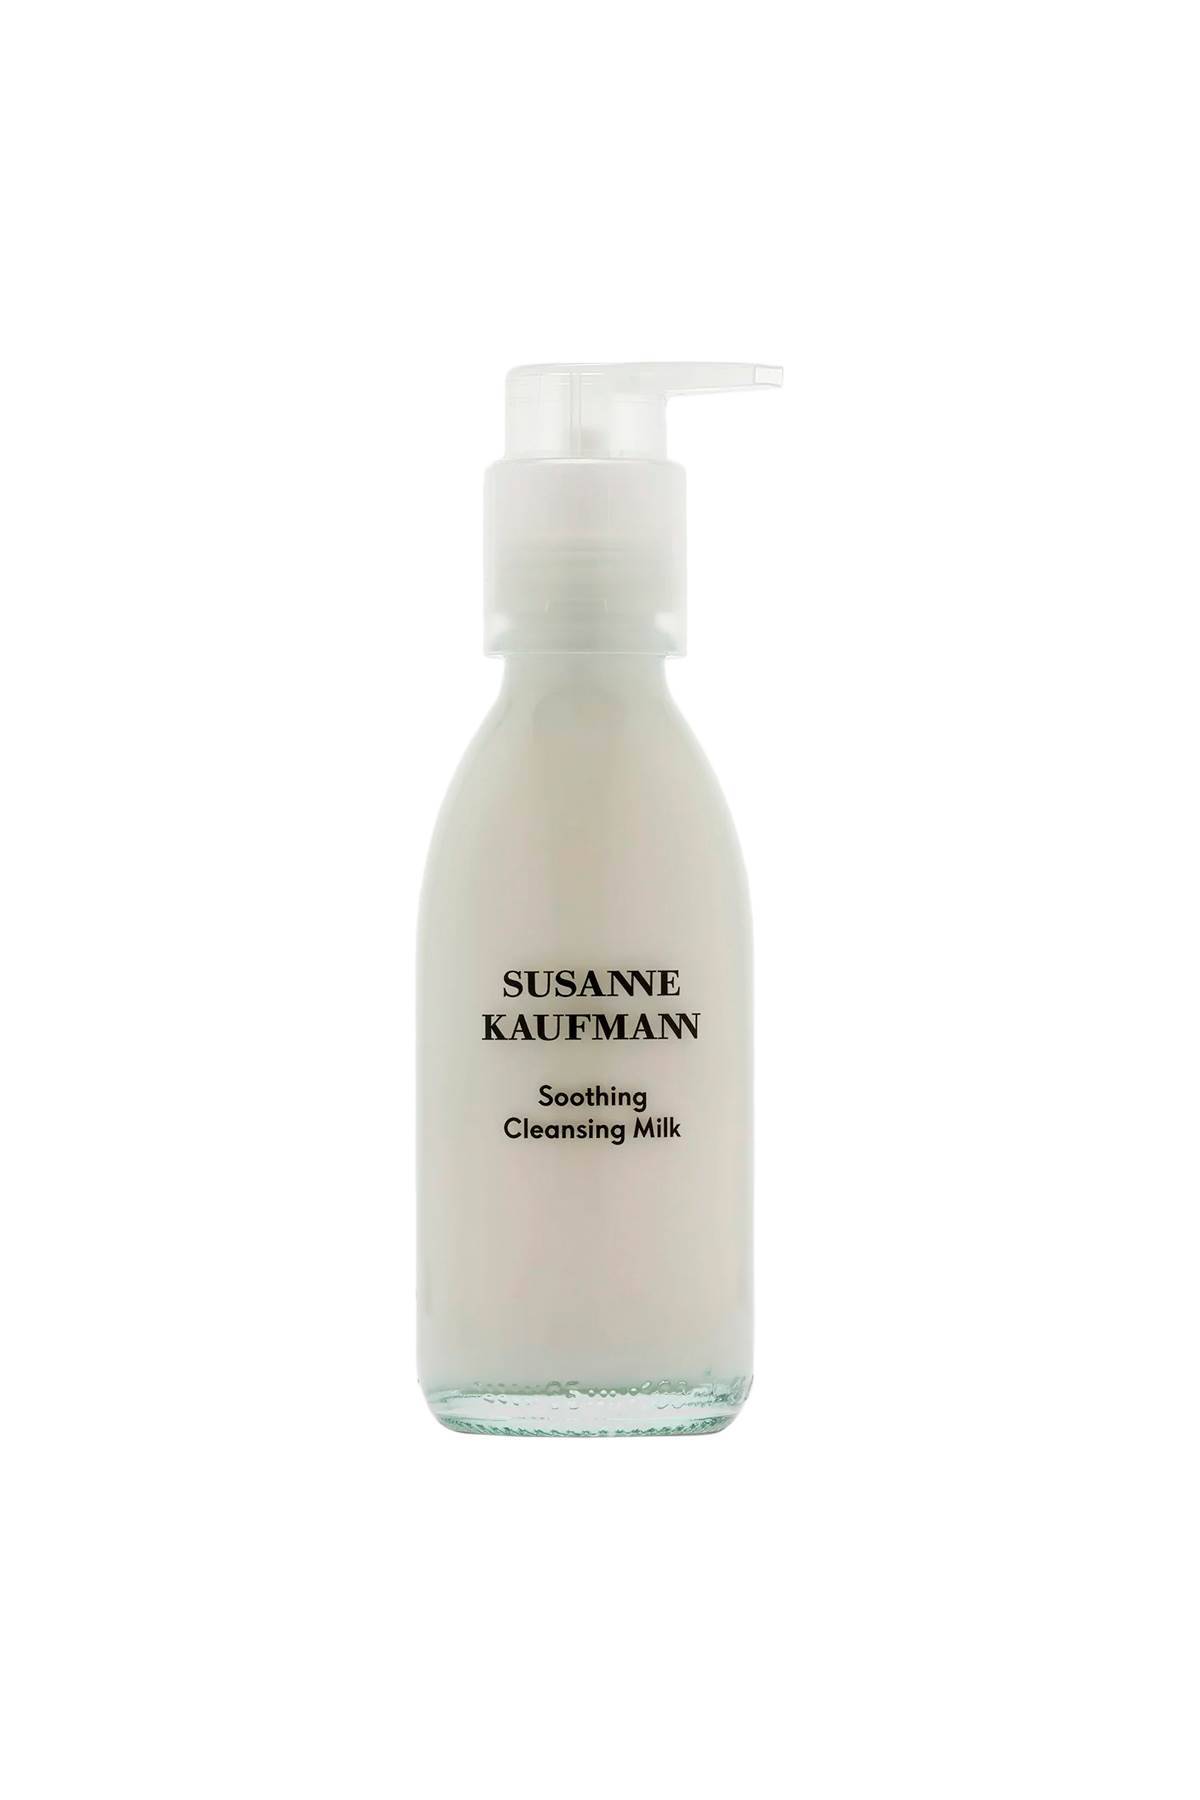 Susanne Kaufmann SUSANNE KAUFMANN soothing cleansing milk - 100 ml